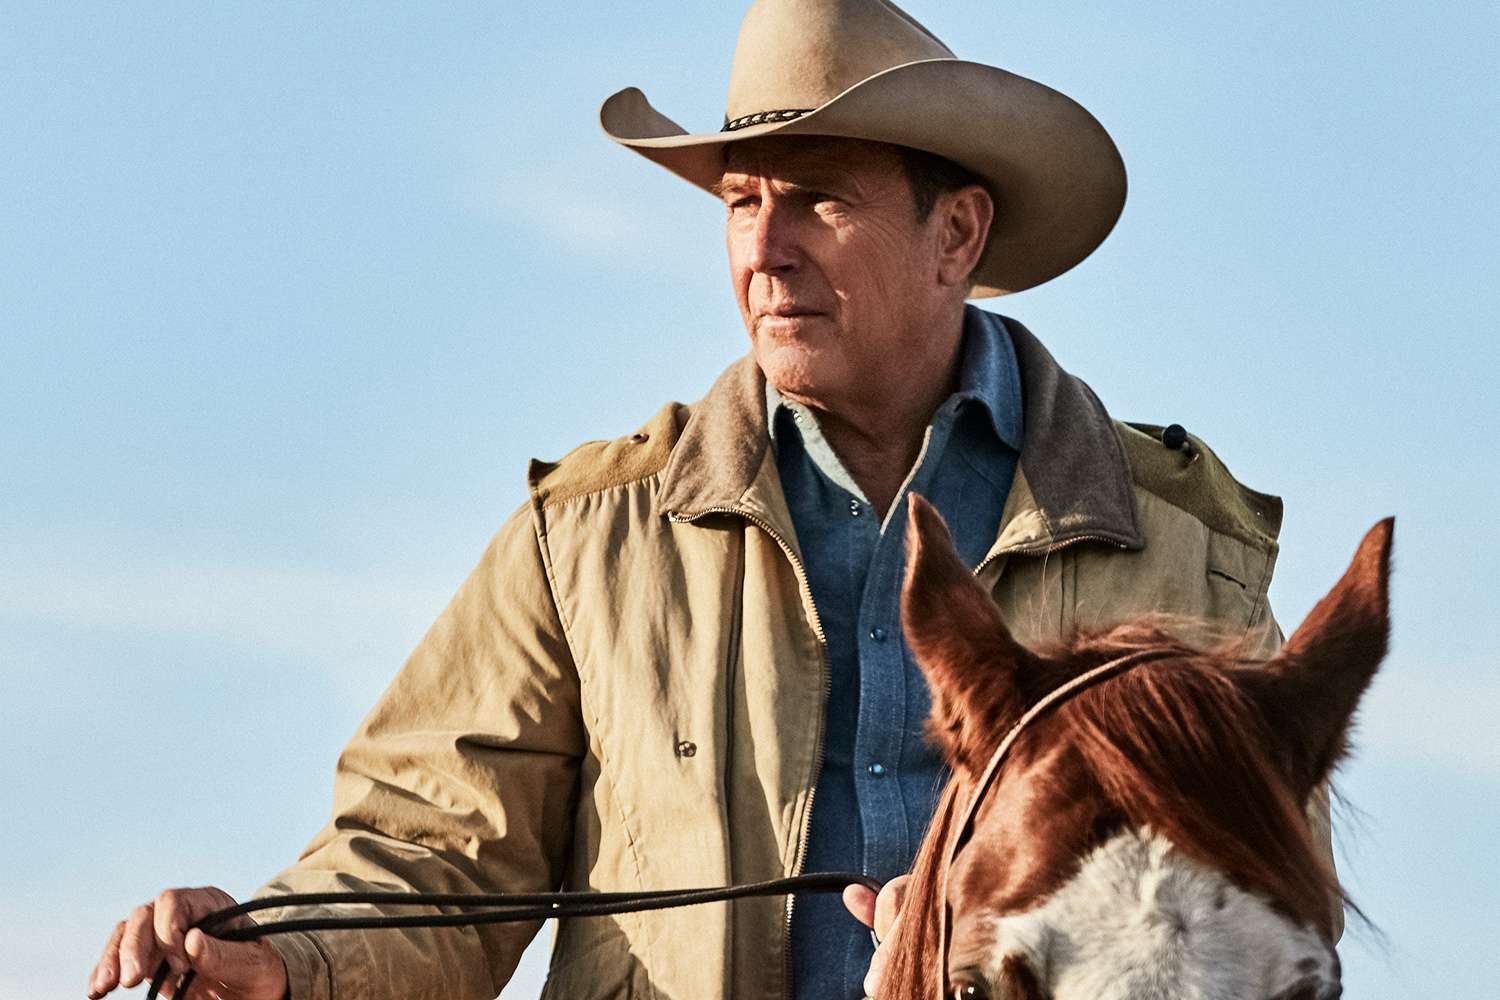 Kevin Costner sairá da série "Yellowstone", diz site